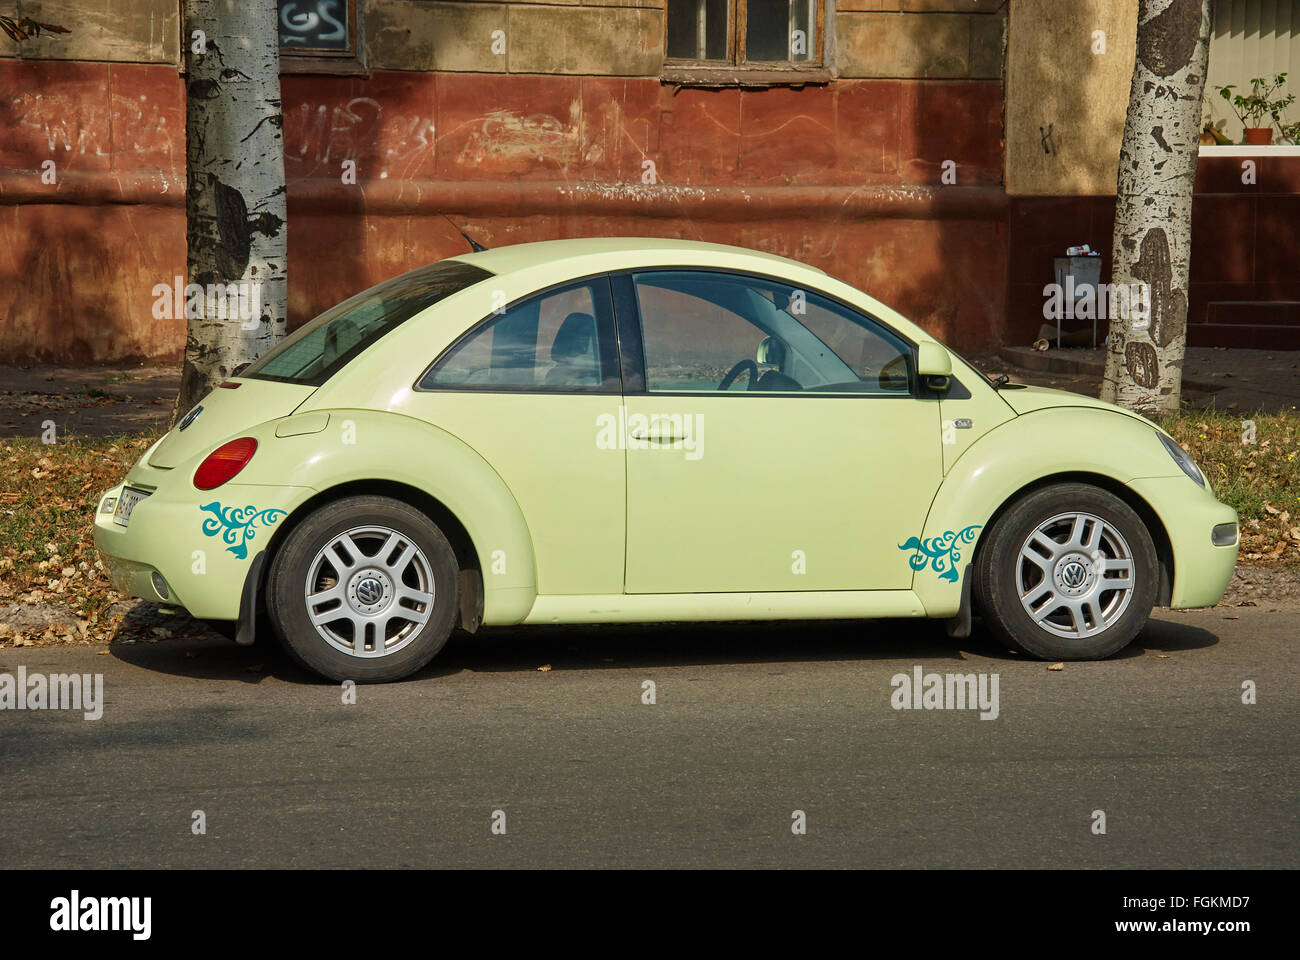 Krivoy Rog, Ukraine - September 24, 2015: Light green Volkswagen New Beetle car parked in a street of the city centre. Stock Photo